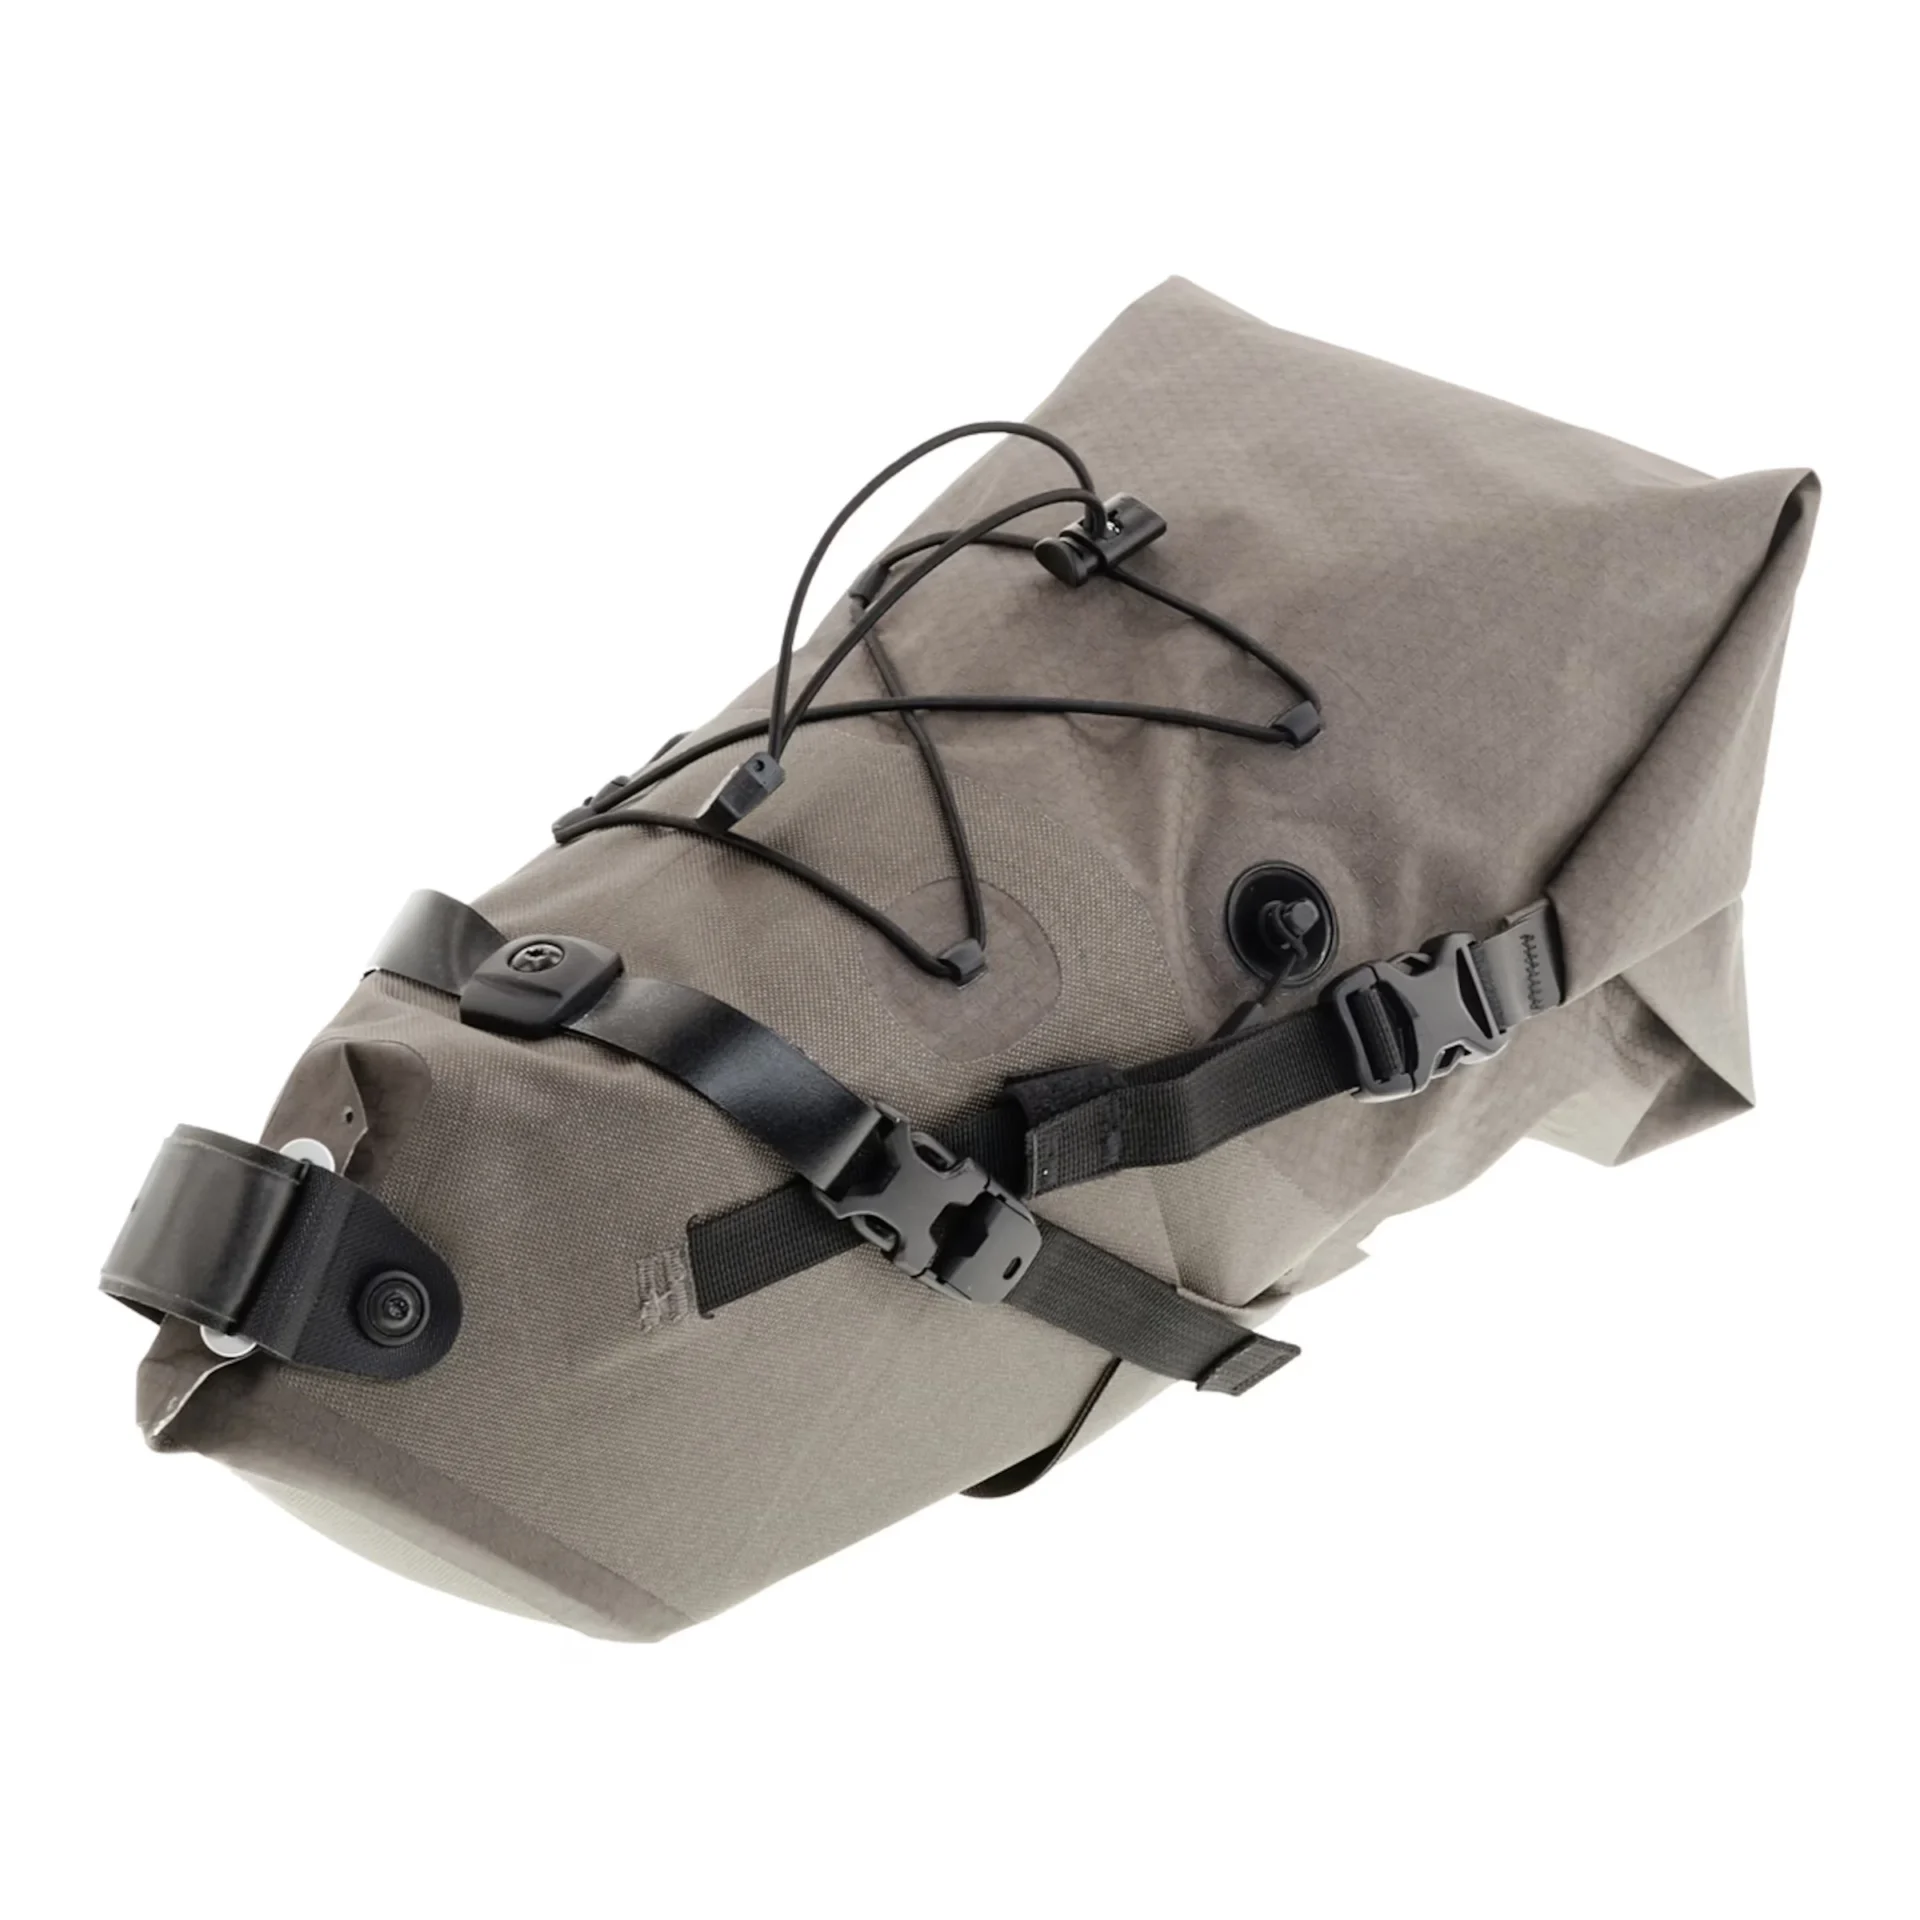 ORTLIEB BIKE PACKING SEAT-PACK M Saddle Bag in dunkel Sand Farbe